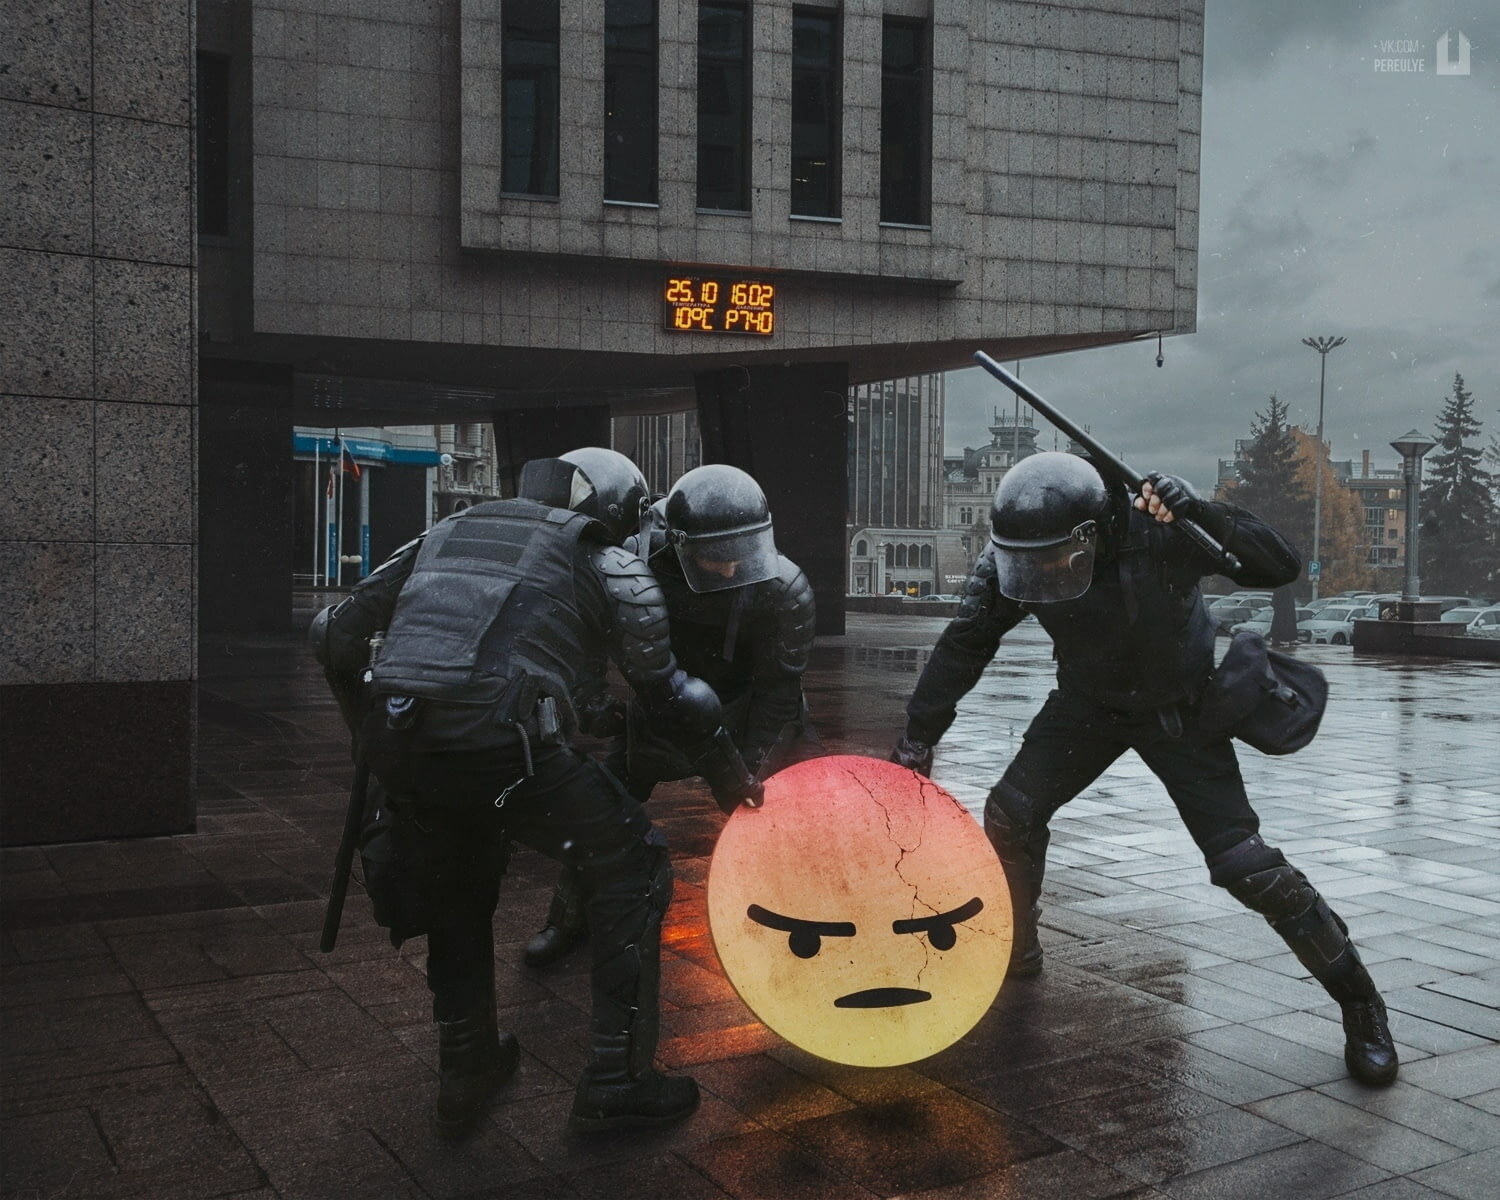 Three policemen beating up an angry emoticon. Image: Lev Pereulkov